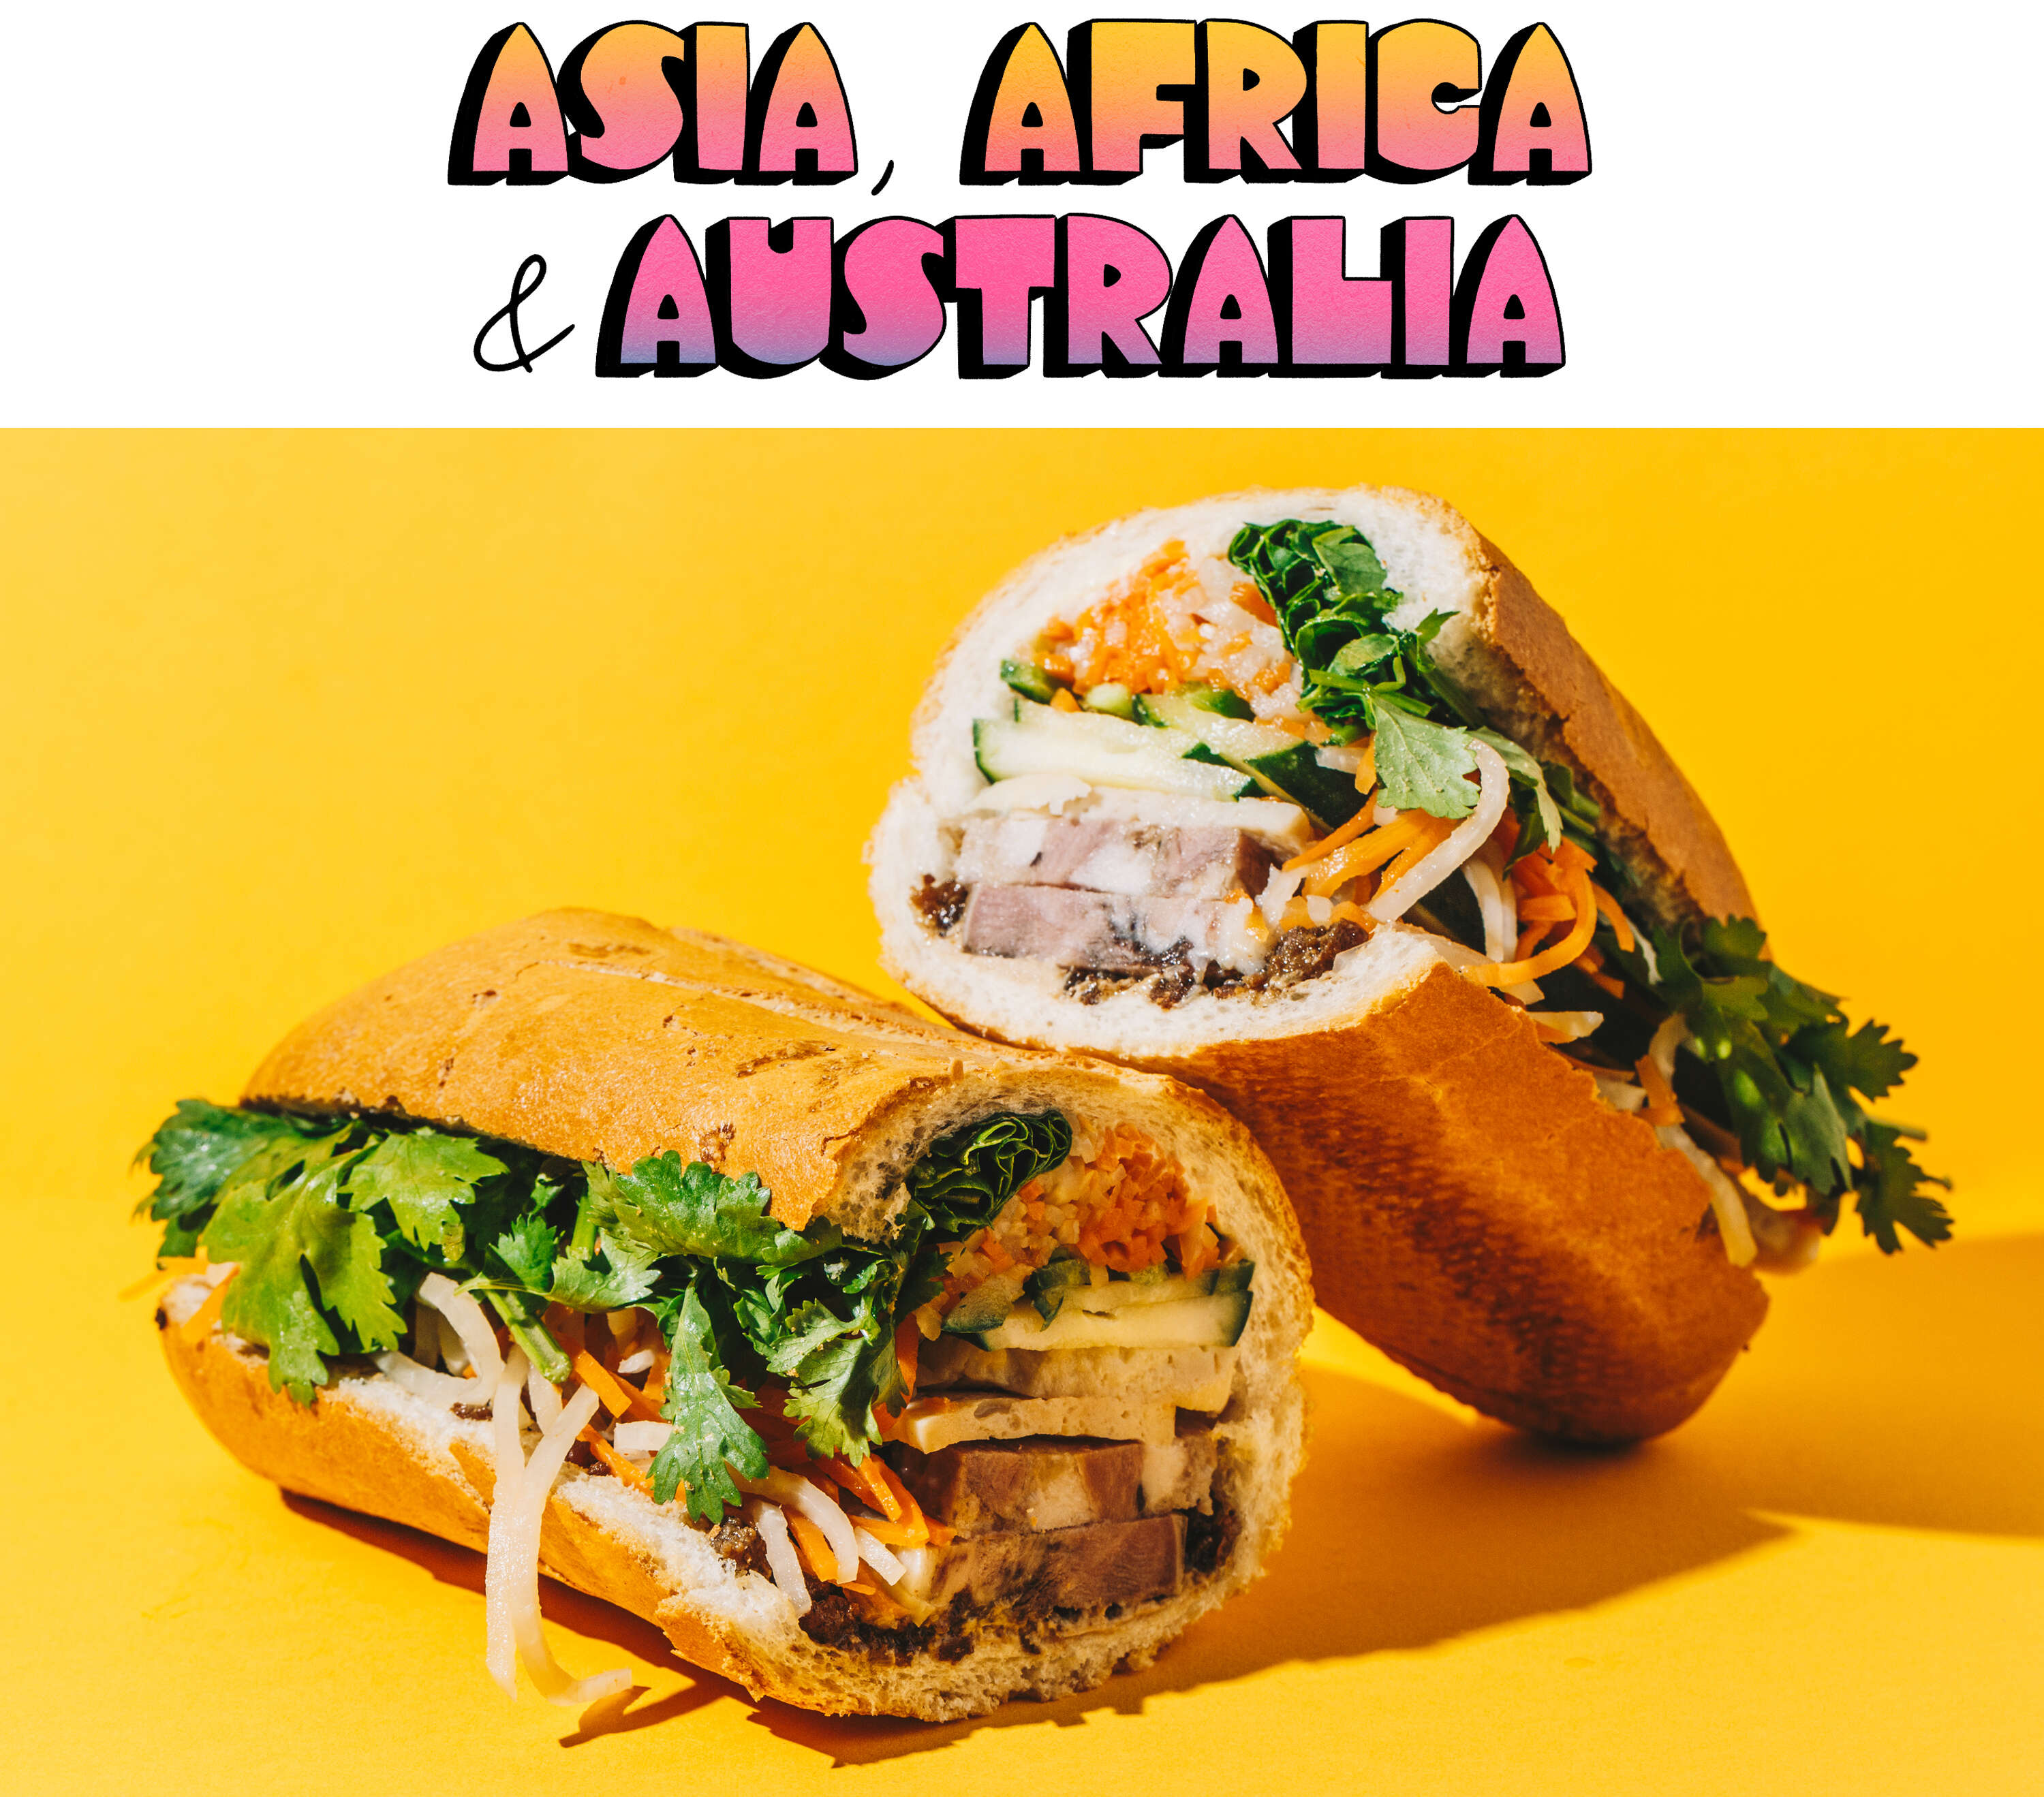 Asia, Africa & Australia and banh mi